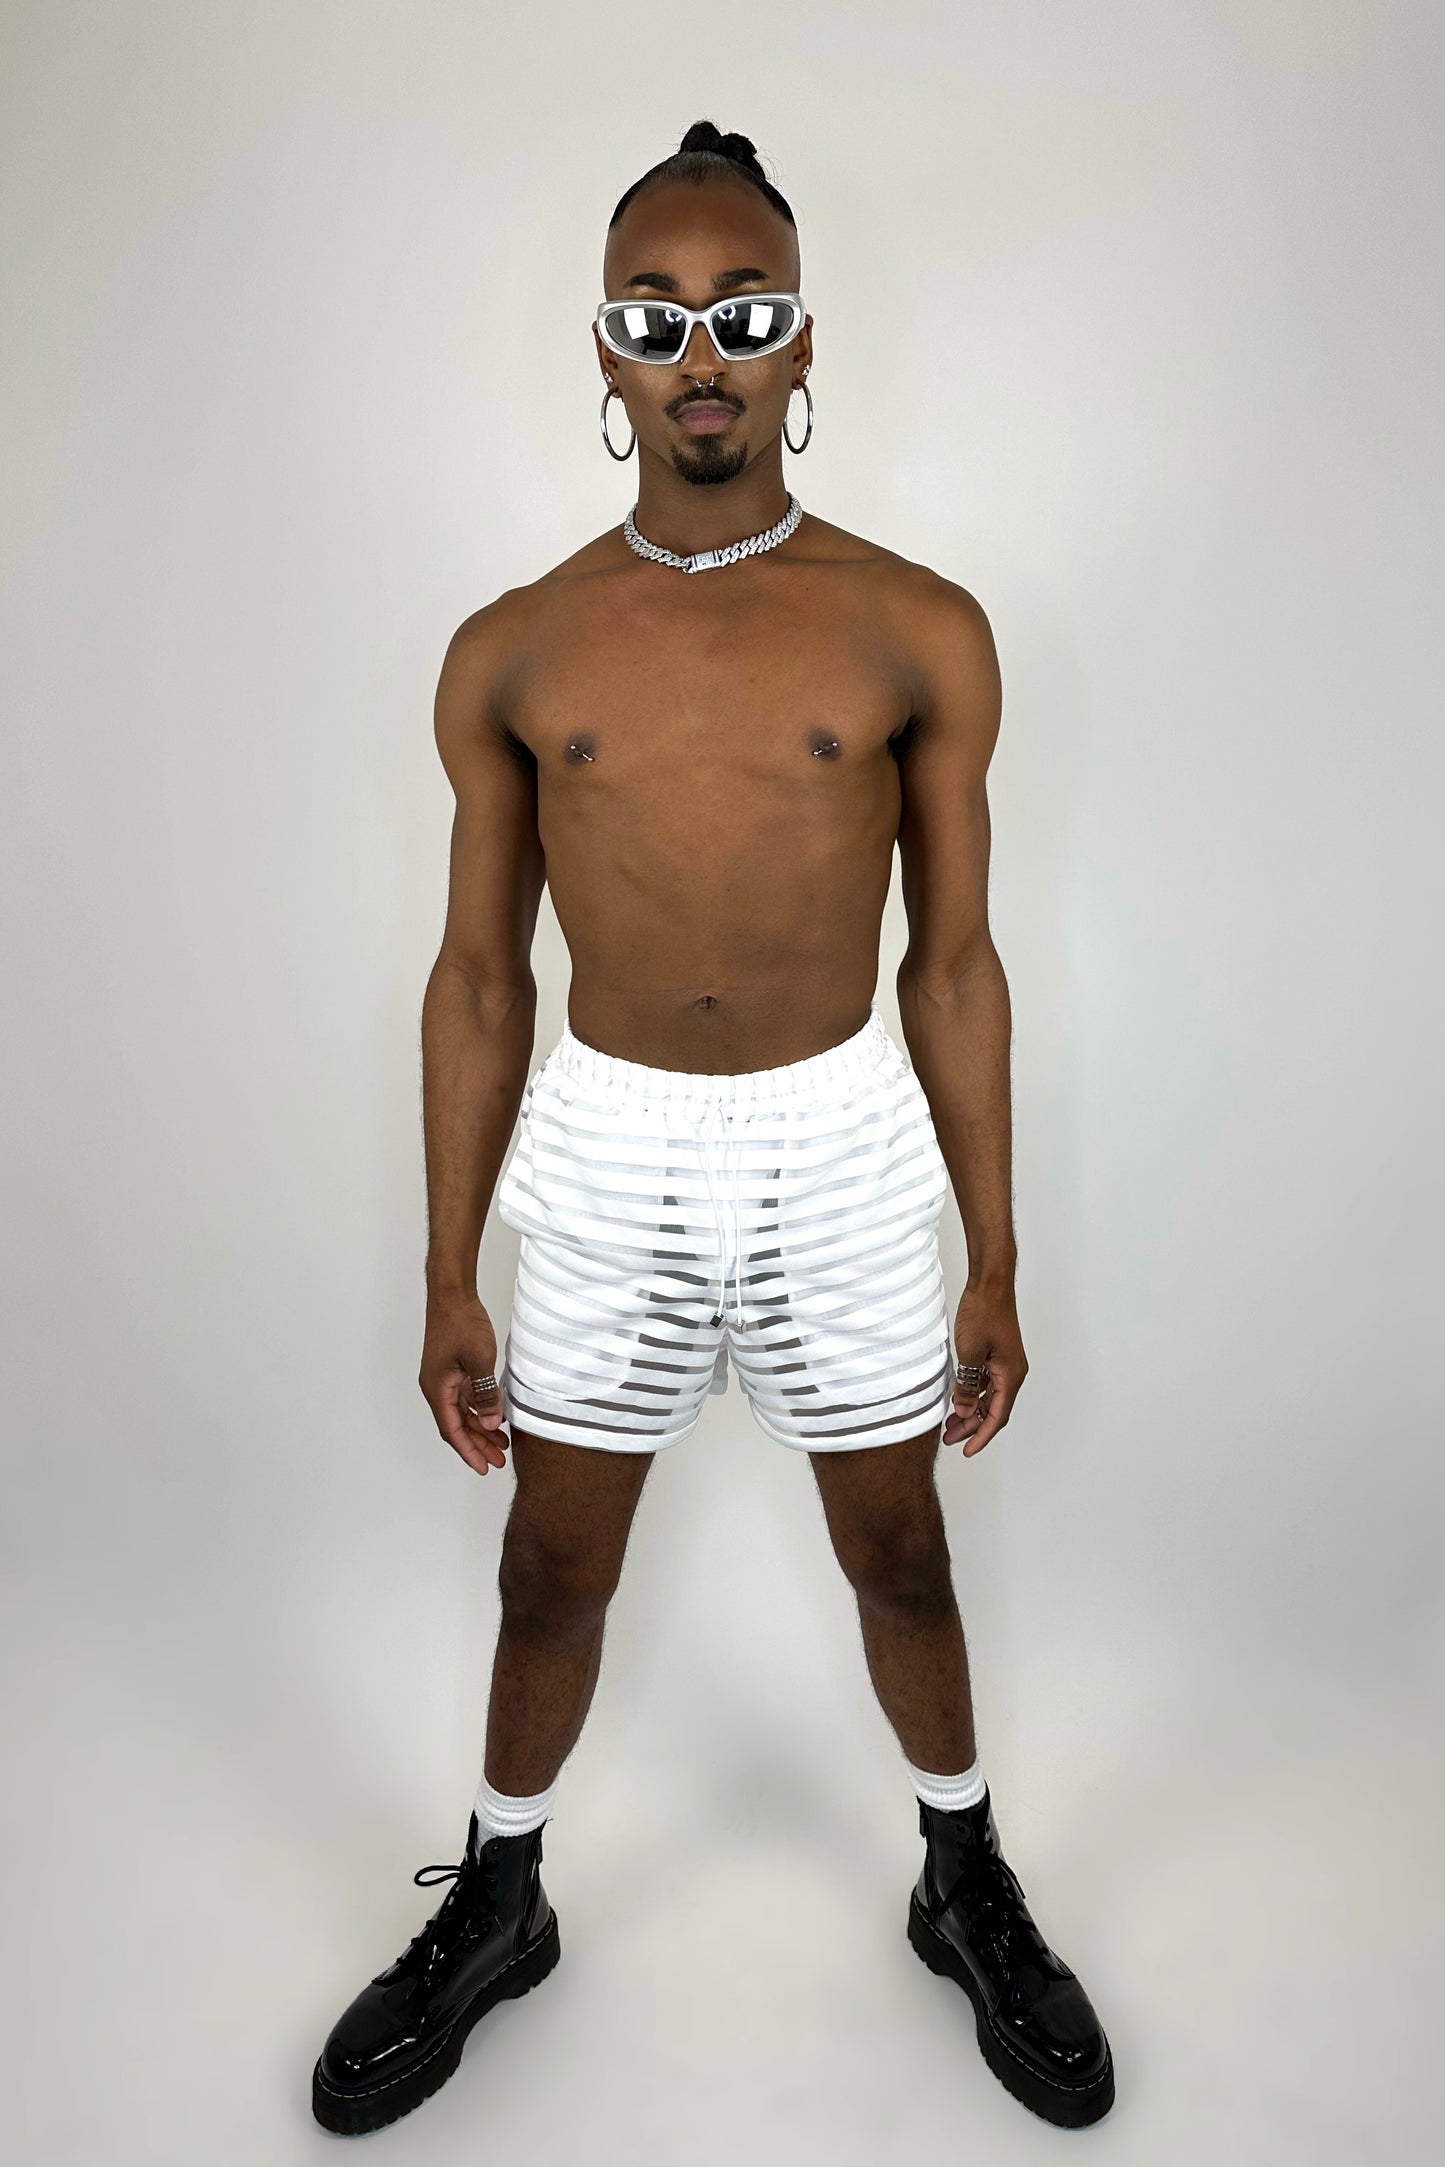 Miami Vice White Shorts